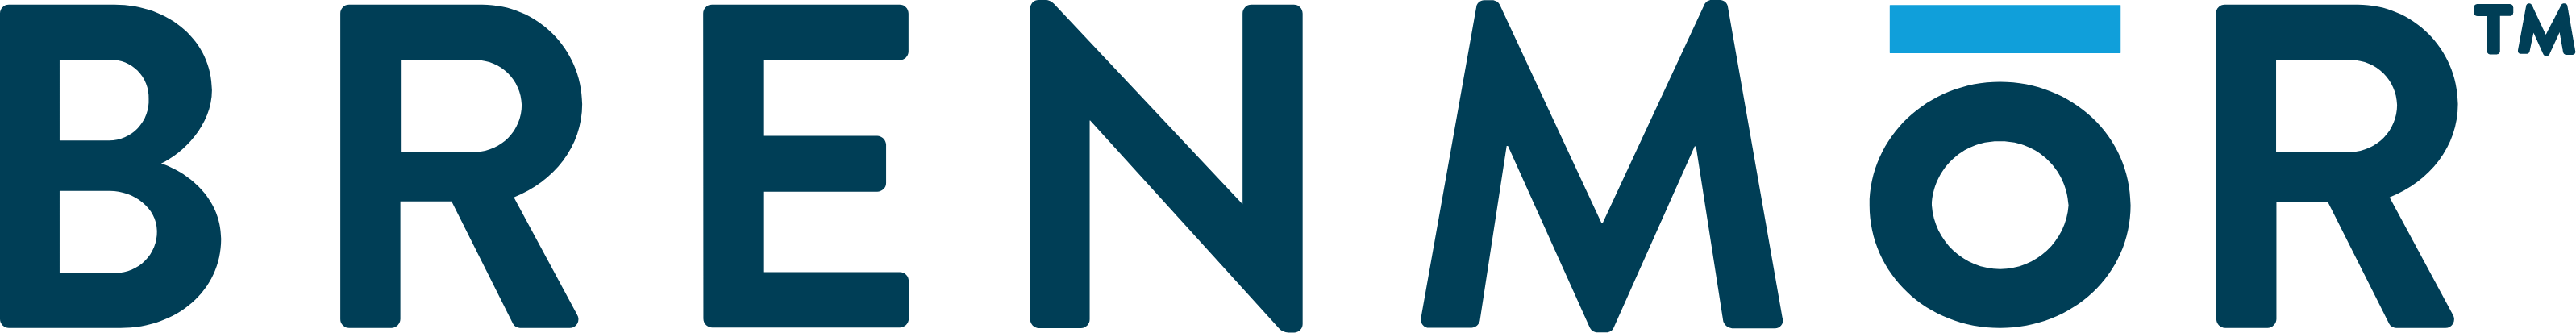 Brenmor Logo - click to navigate home